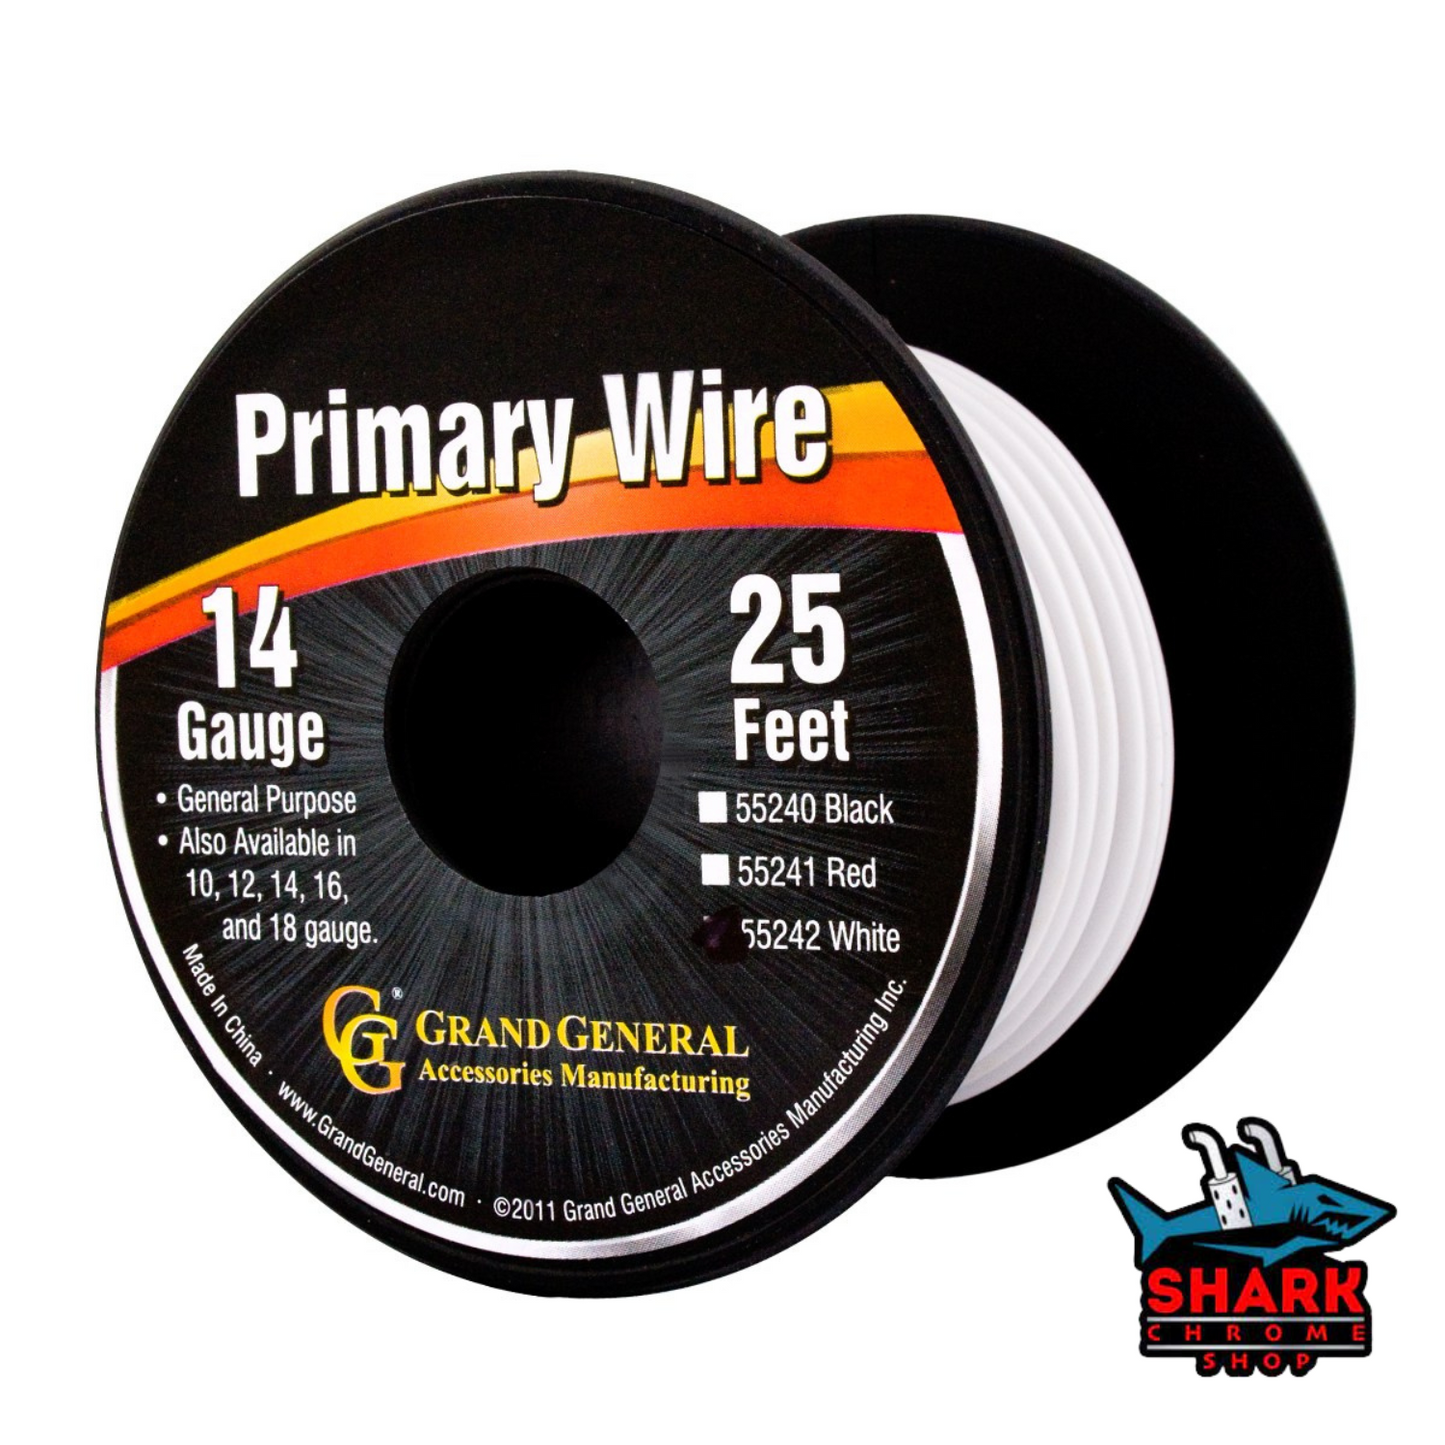 14 Gauge Primary Wire